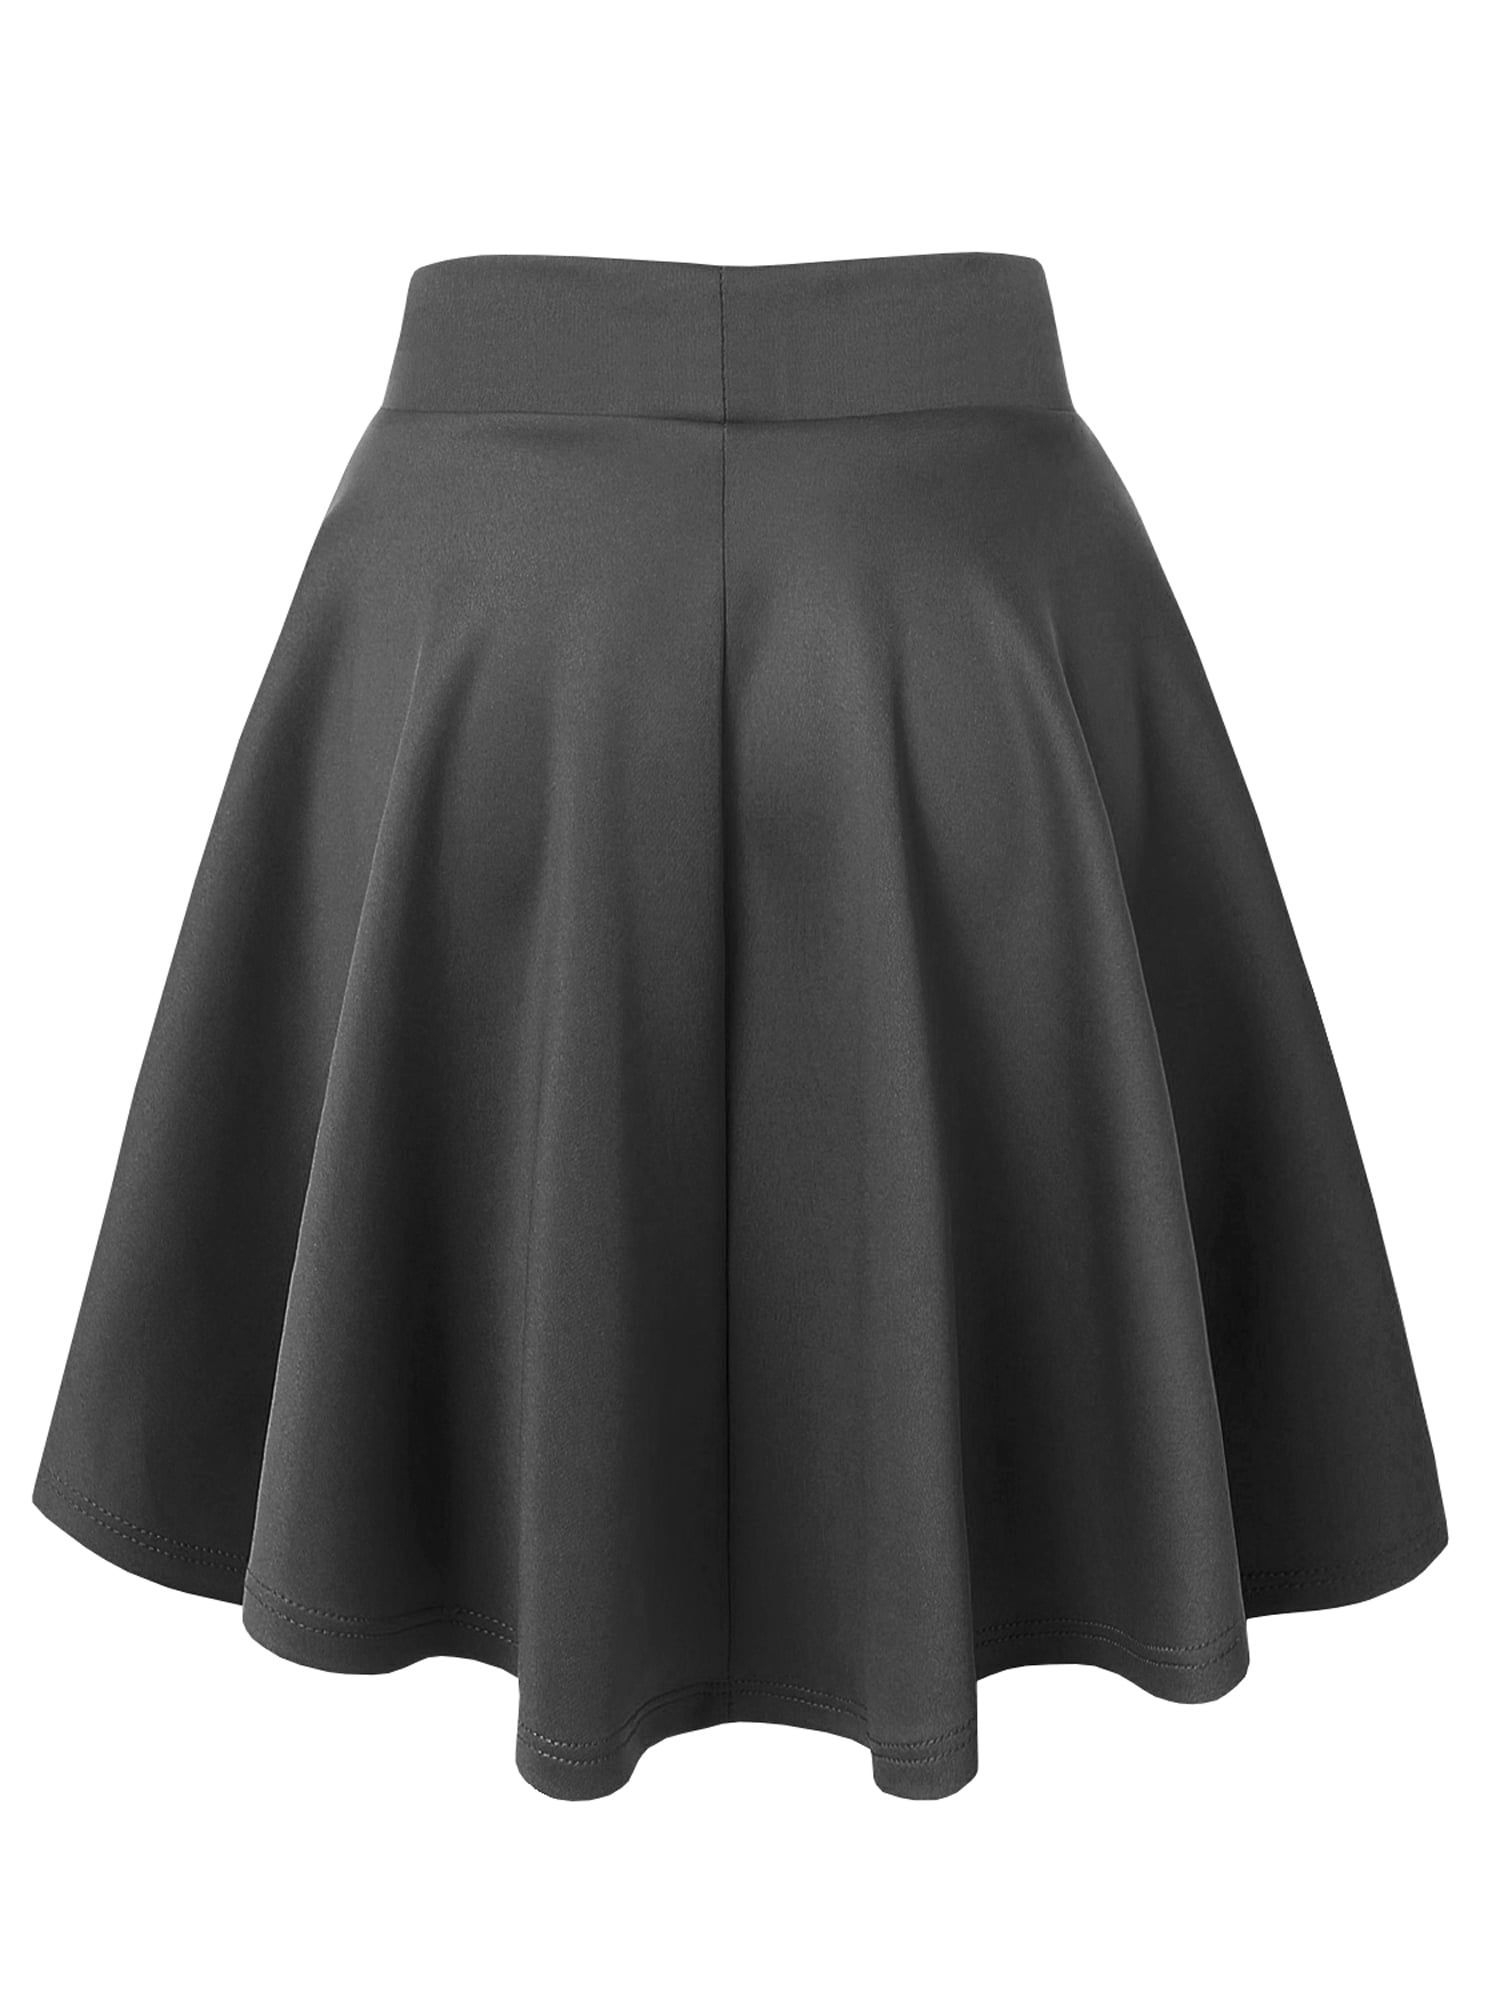 Amazon.com: Zando Elastic Pleated Skirts for Women Mini Skirts Plus Size  A-Line Skirt High Waisted Short Skirts Black Skirt Black Mini Skirt Black  Skirt for Women Black Pleated Skirt Black Small Size :